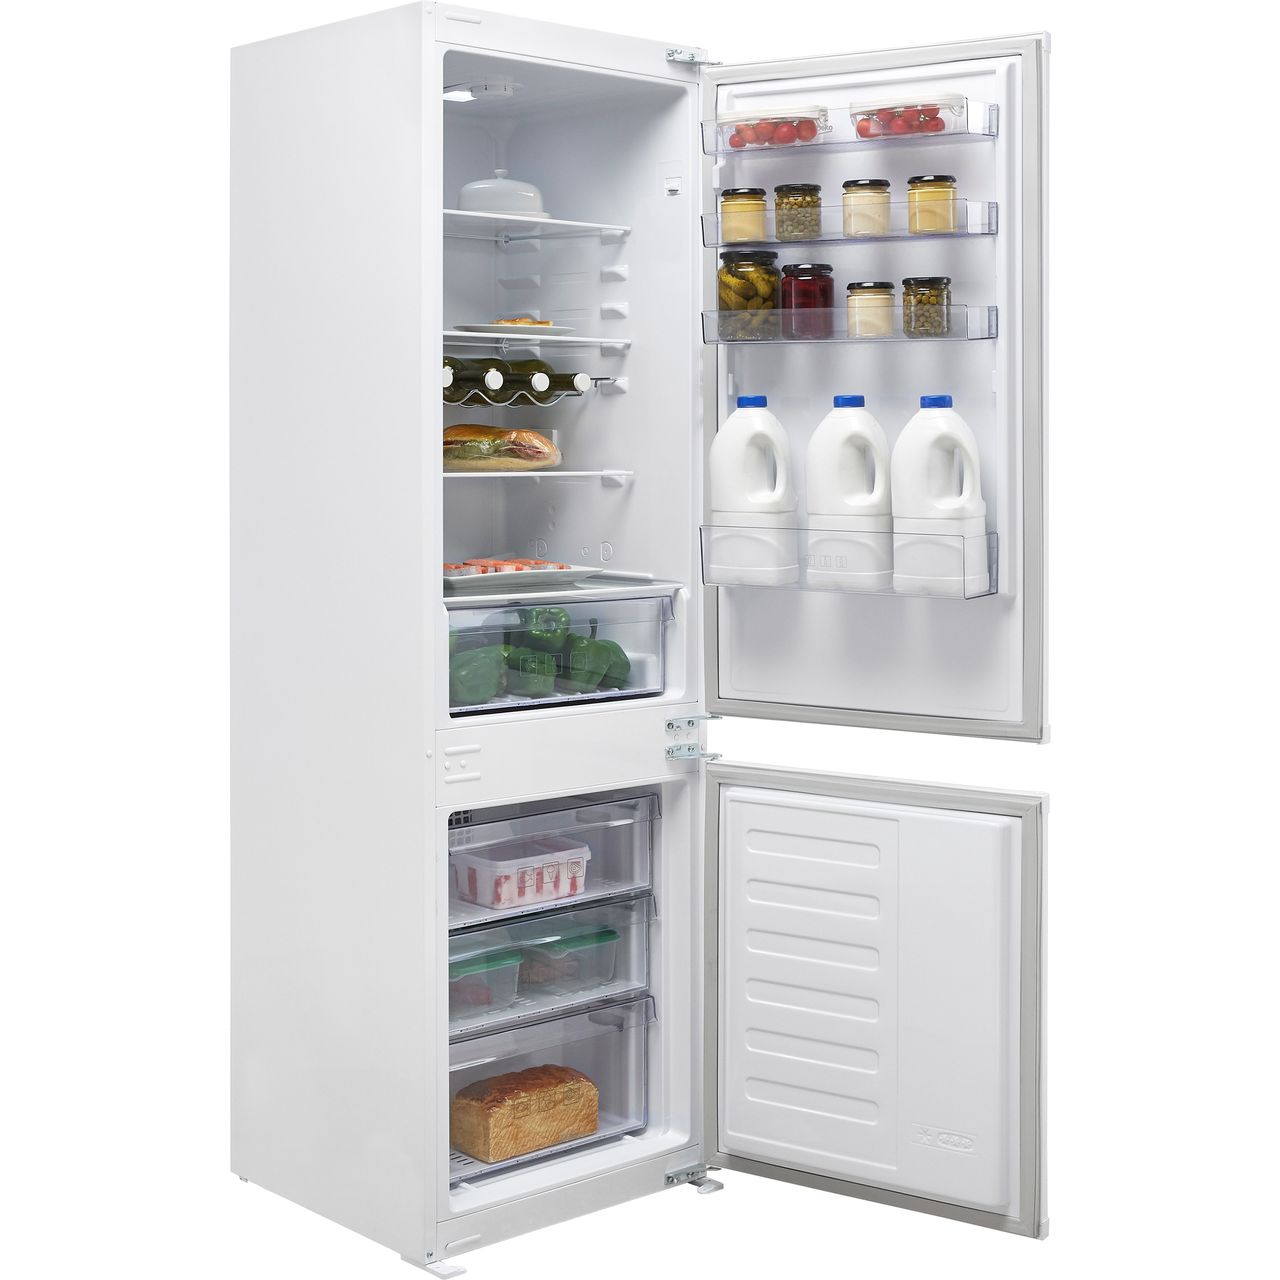 16++ Integrated fridge near me information